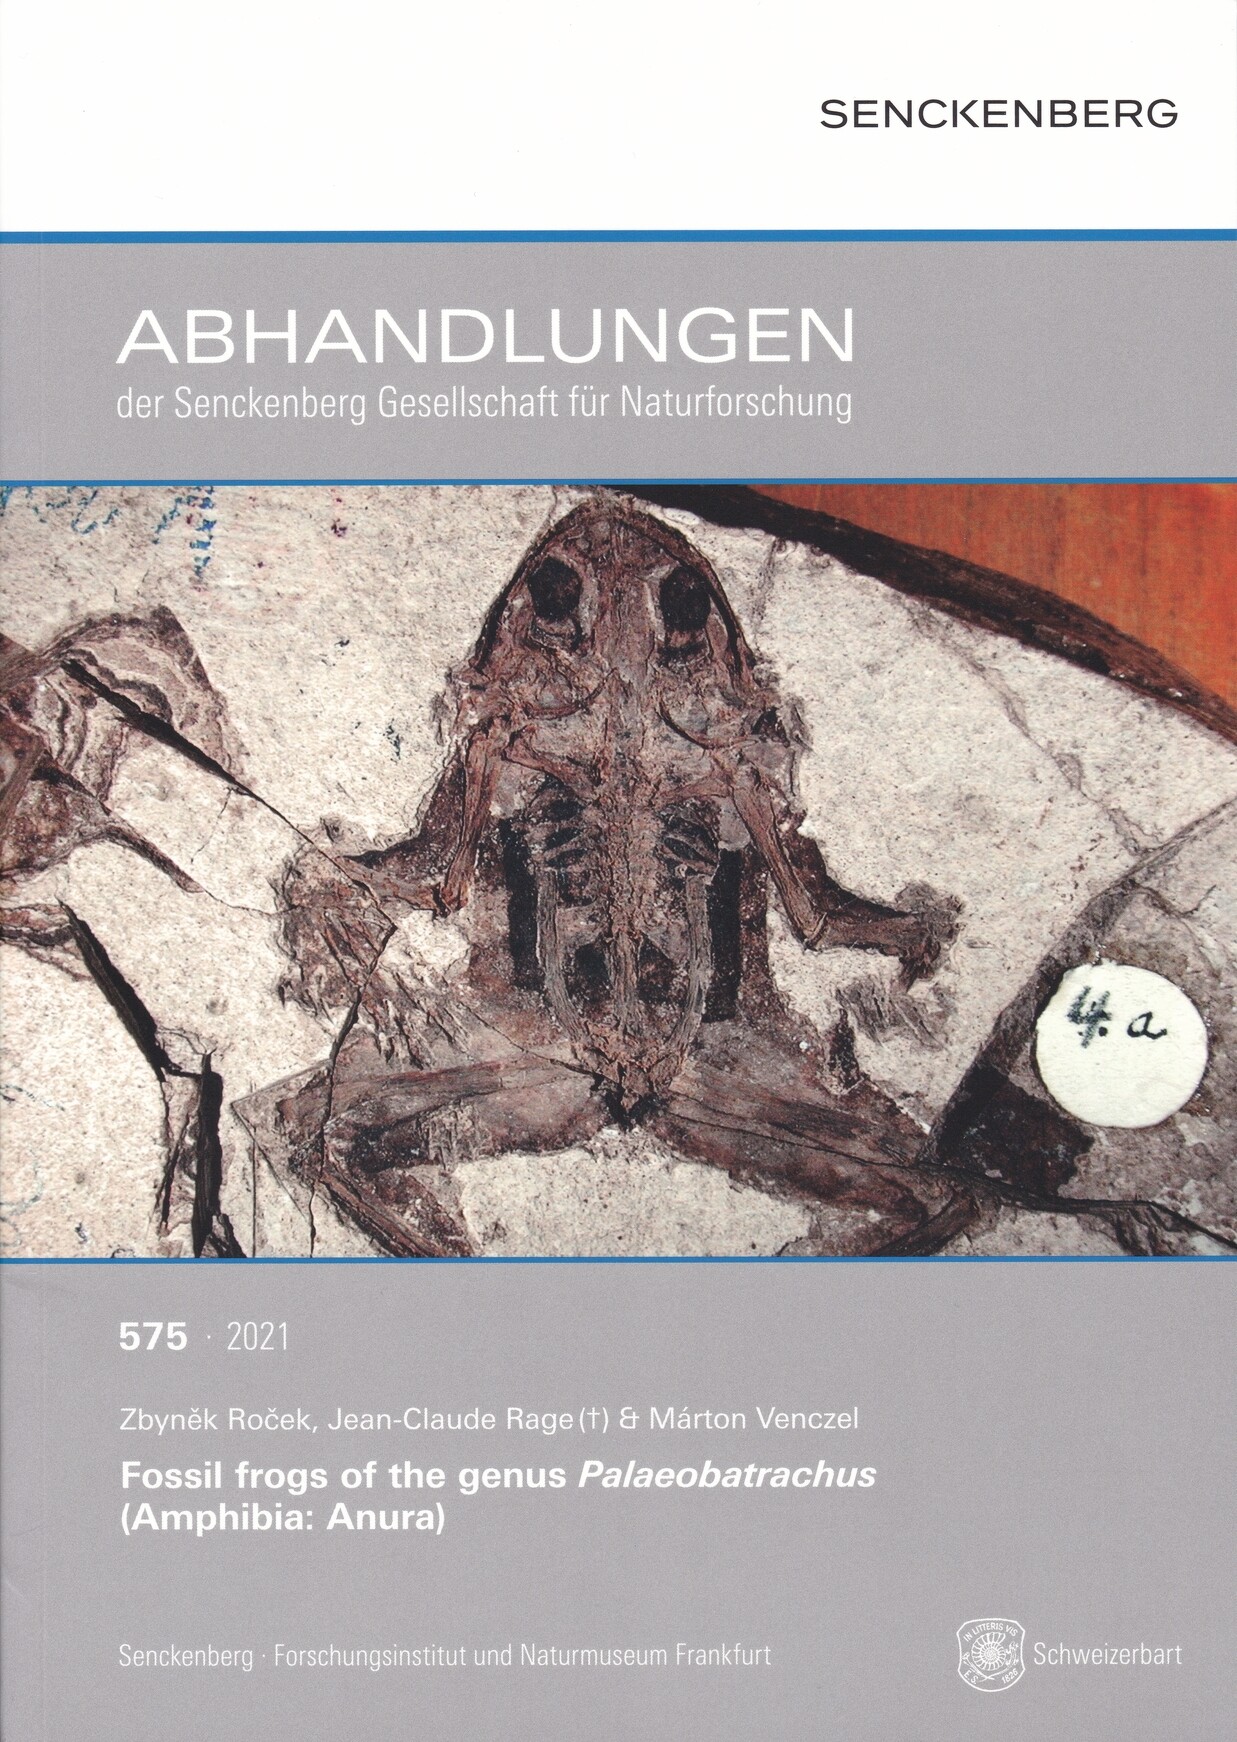 Zbynek Rocek,;Jean-Claude Rage; Márton Venczel: Fossil frogs of the genus Palaeobatrachus (Amphibia: Anura) (Rippl-Rónai Múzeum CC BY-NC-ND)